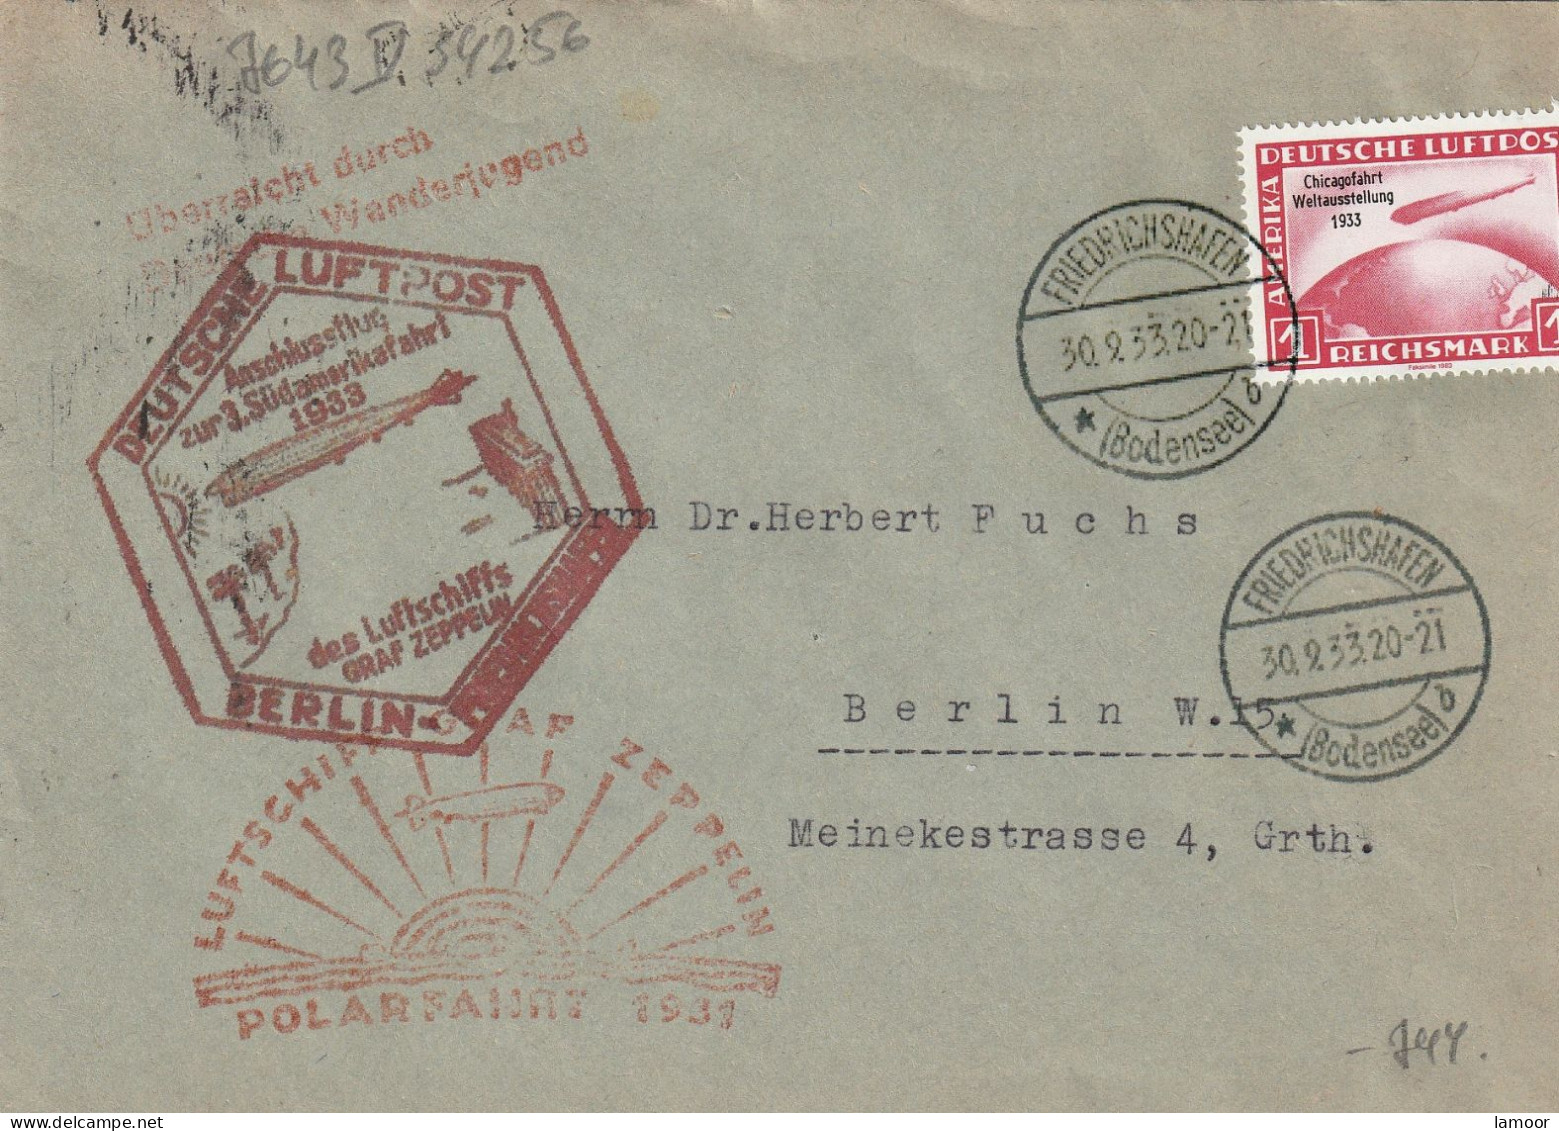 Zeppelin, Zeppelinpost LZ 127, Polarfahrt, 1933,  Brief Graf Zeppelin  REPRODUKTION FÄLSCHUNG KOPIE - Marchands Ambulants